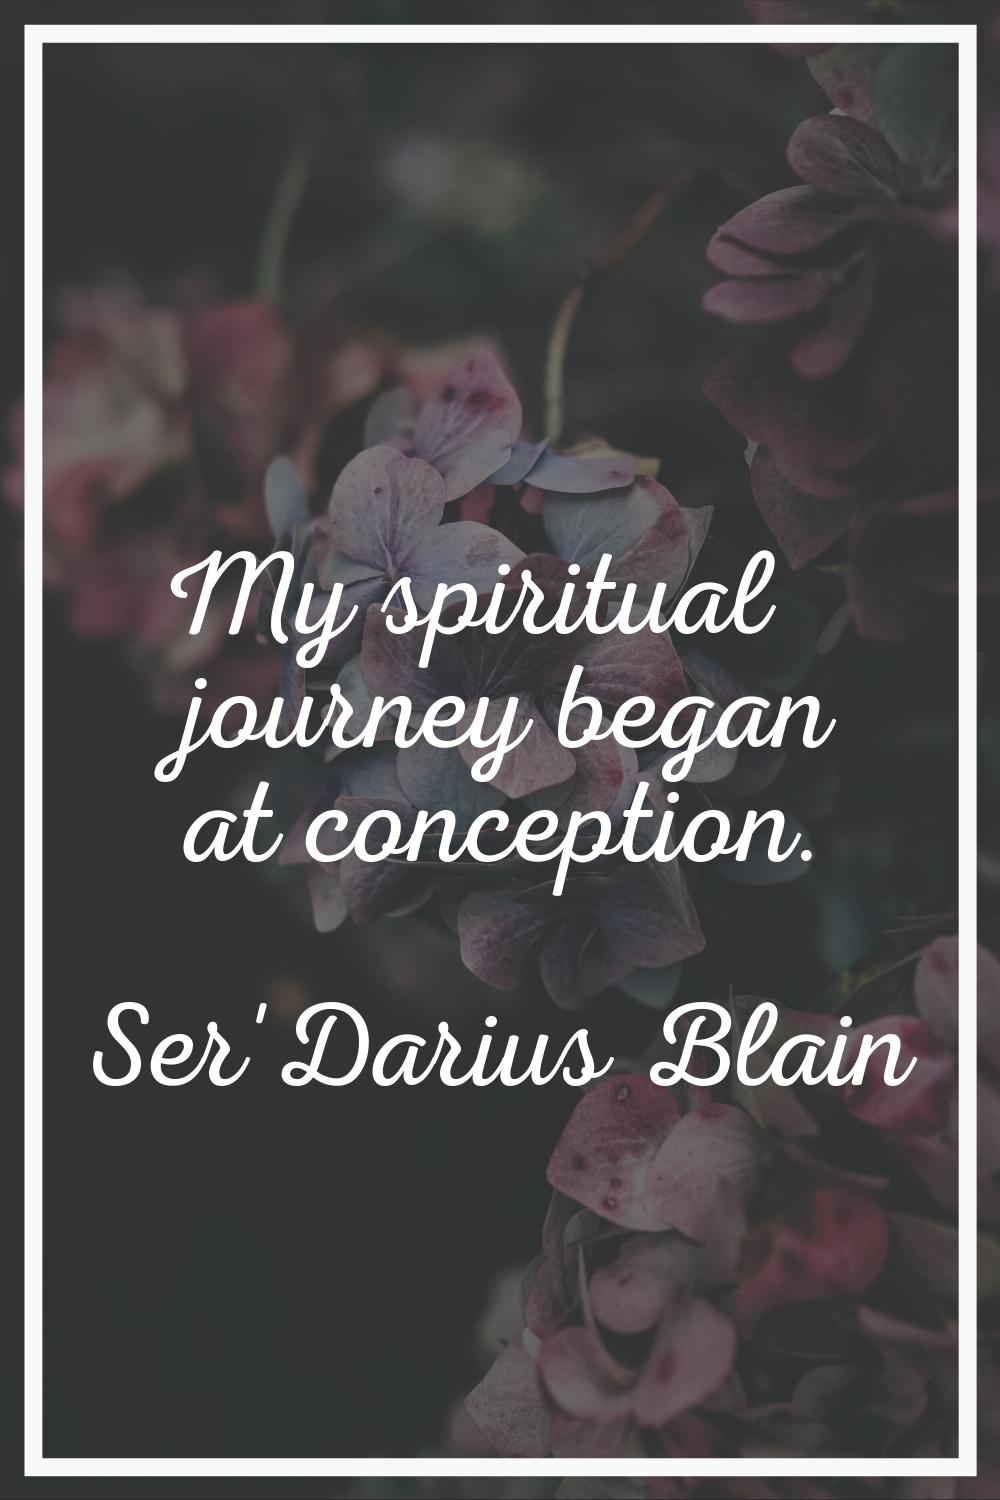 My spiritual journey began at conception.